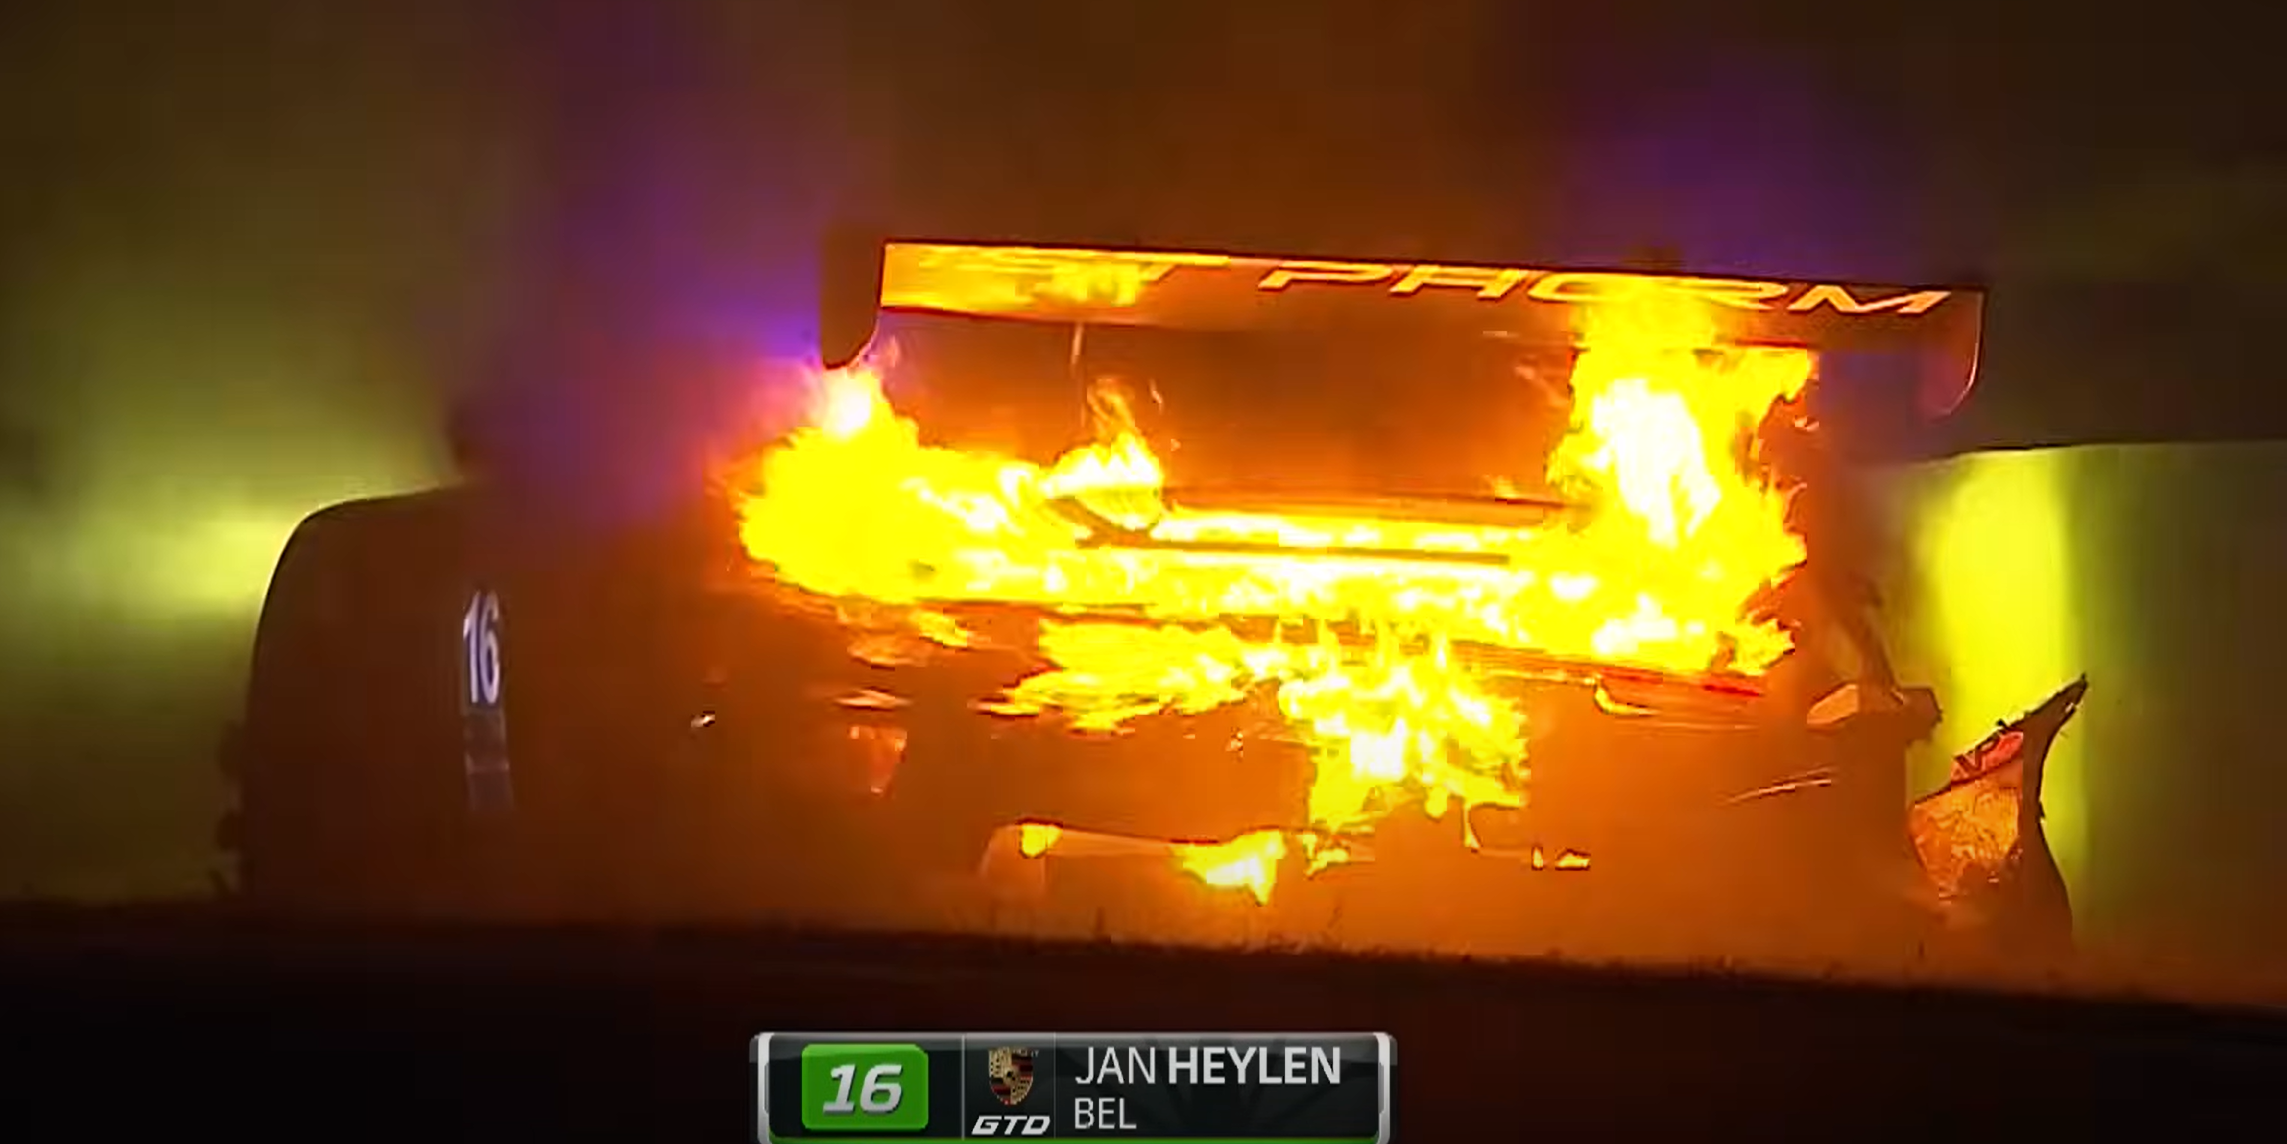 IMSA Driver Puts Out Burning Porsche Race Car Himself